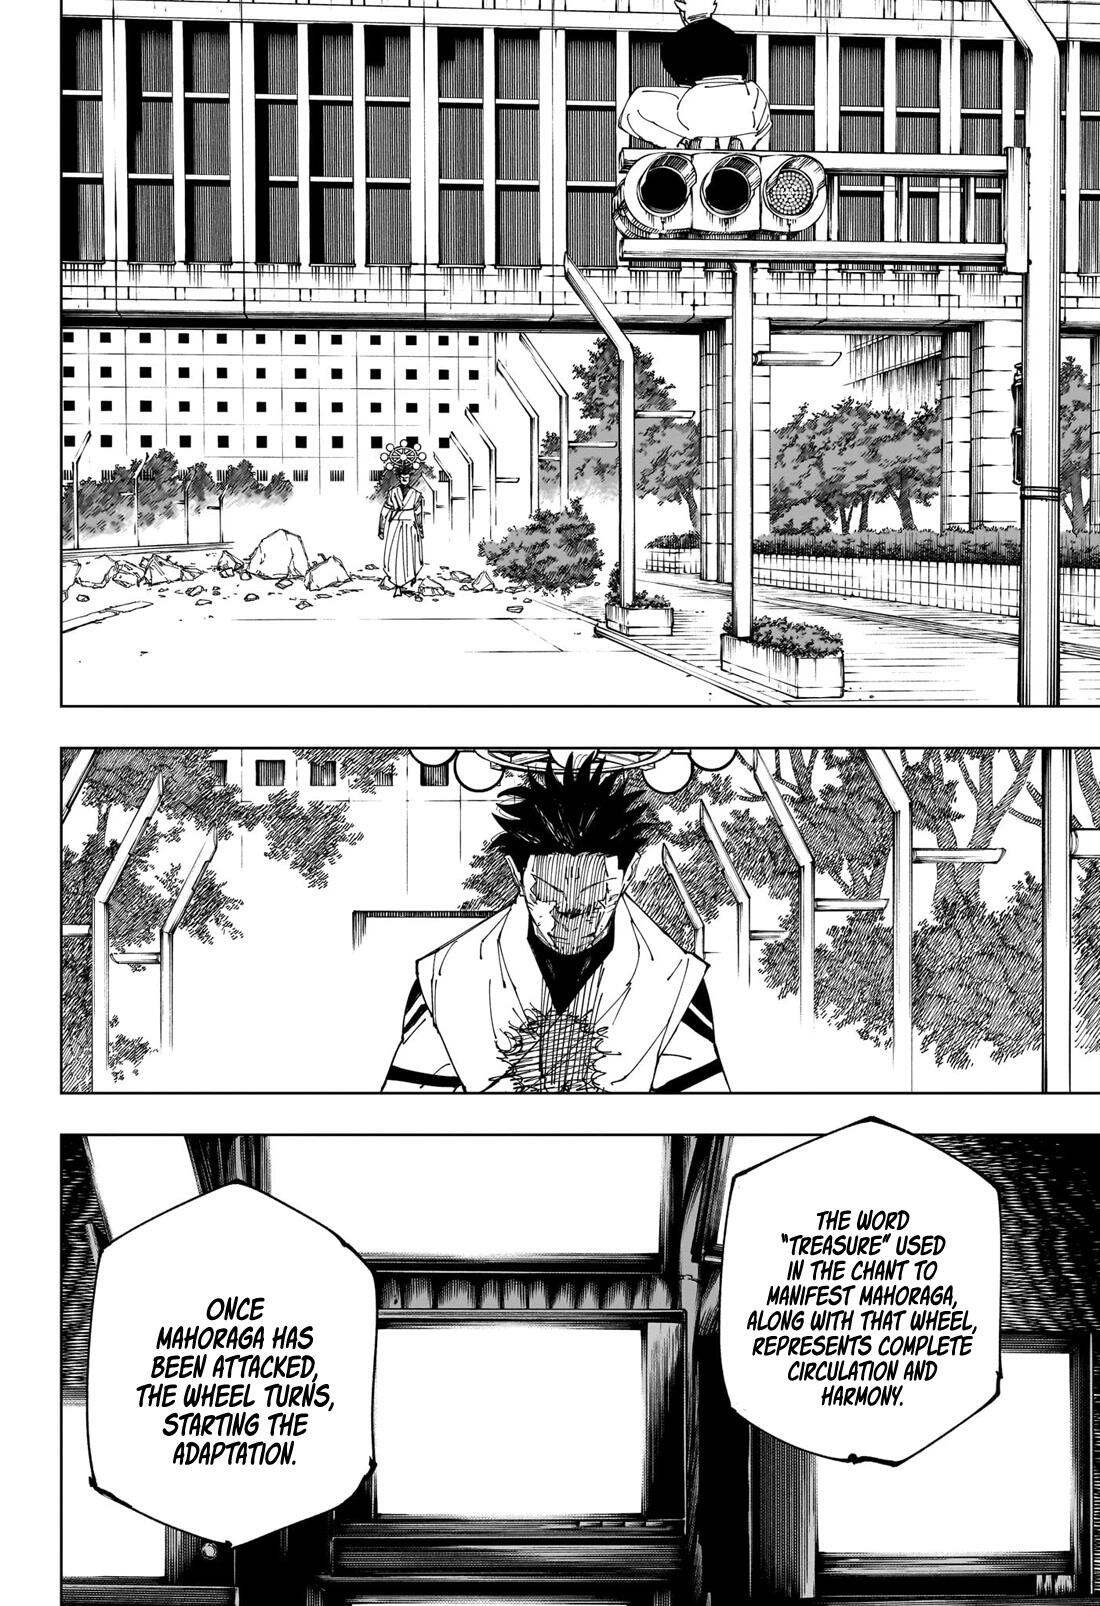 Jujutsu Kaisen Chapter 231: The Decisive Battle In The Uninhabited, Demon-Infested Shinjuku ⑨ page 12 - Mangakakalot